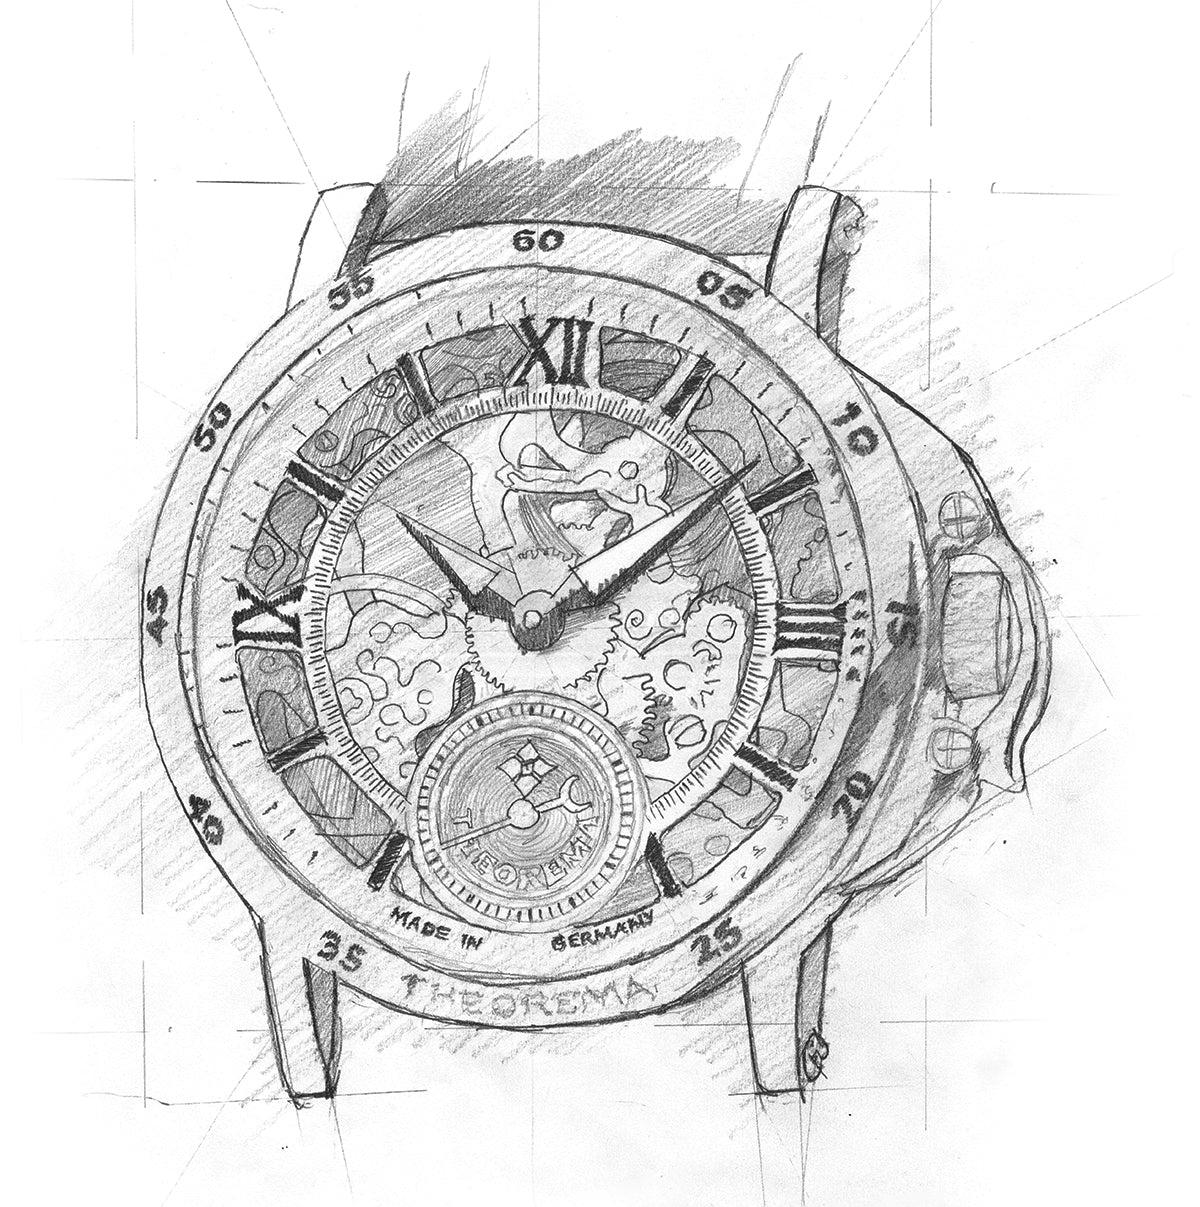 Geneva Wrist Watch Pencil Drawing by MissTangshan95 on DeviantArt